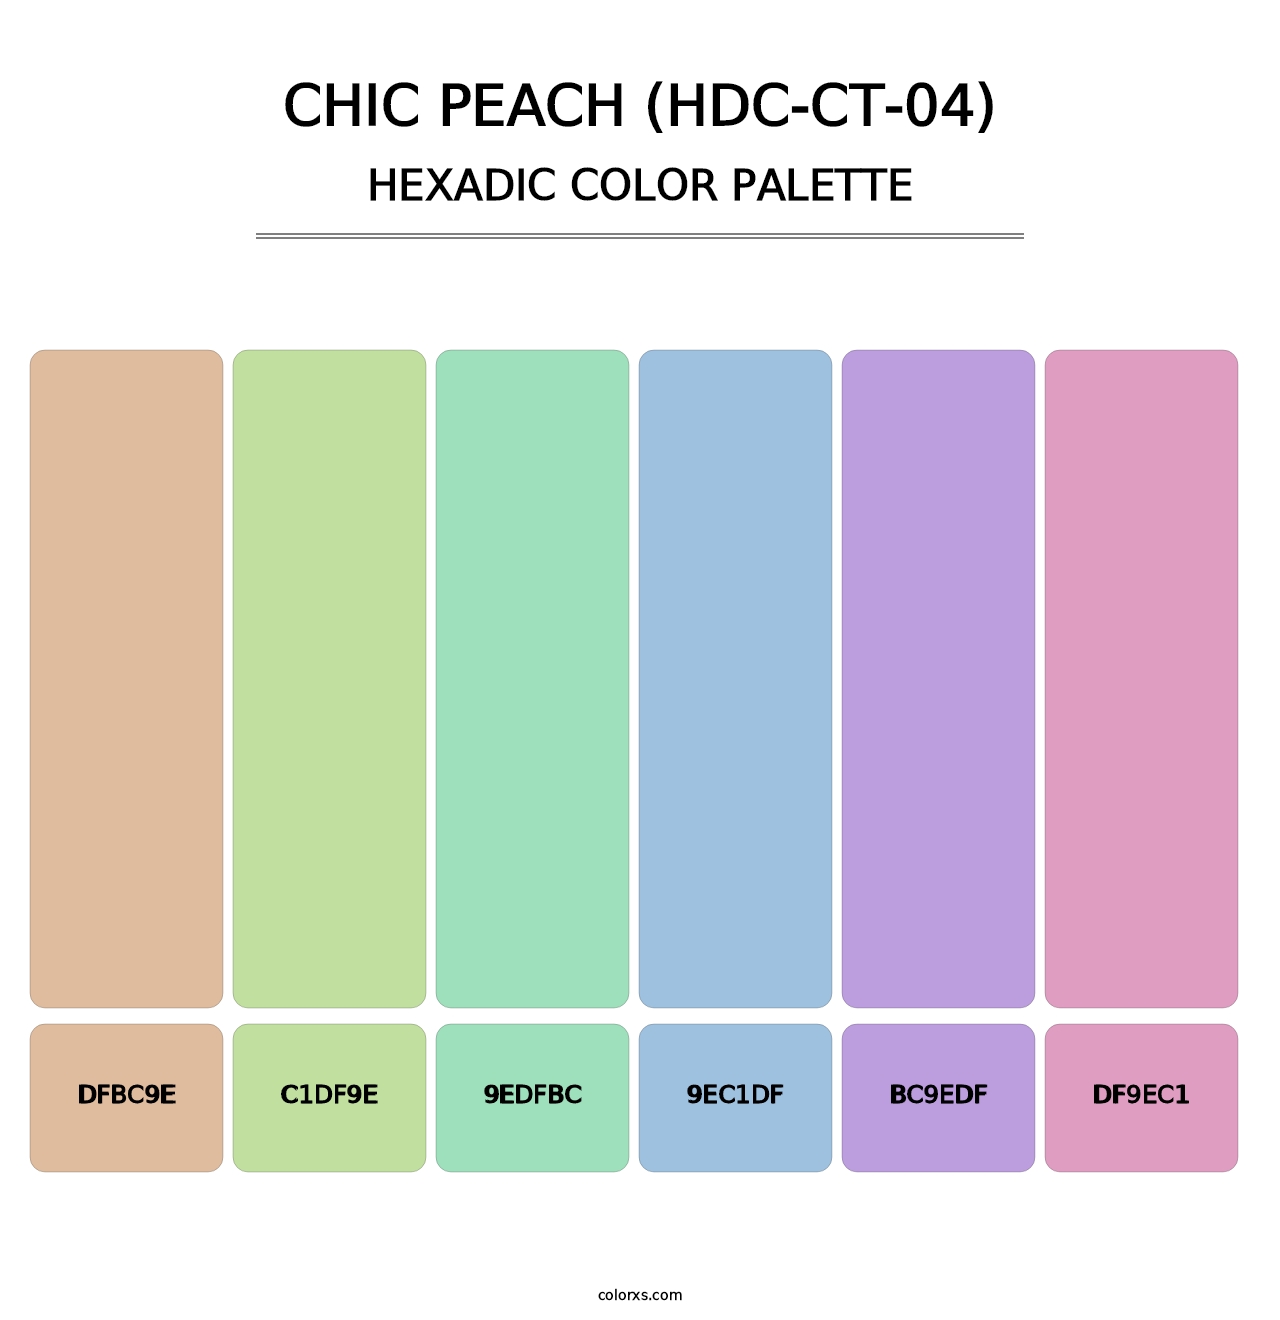 Chic Peach (HDC-CT-04) - Hexadic Color Palette